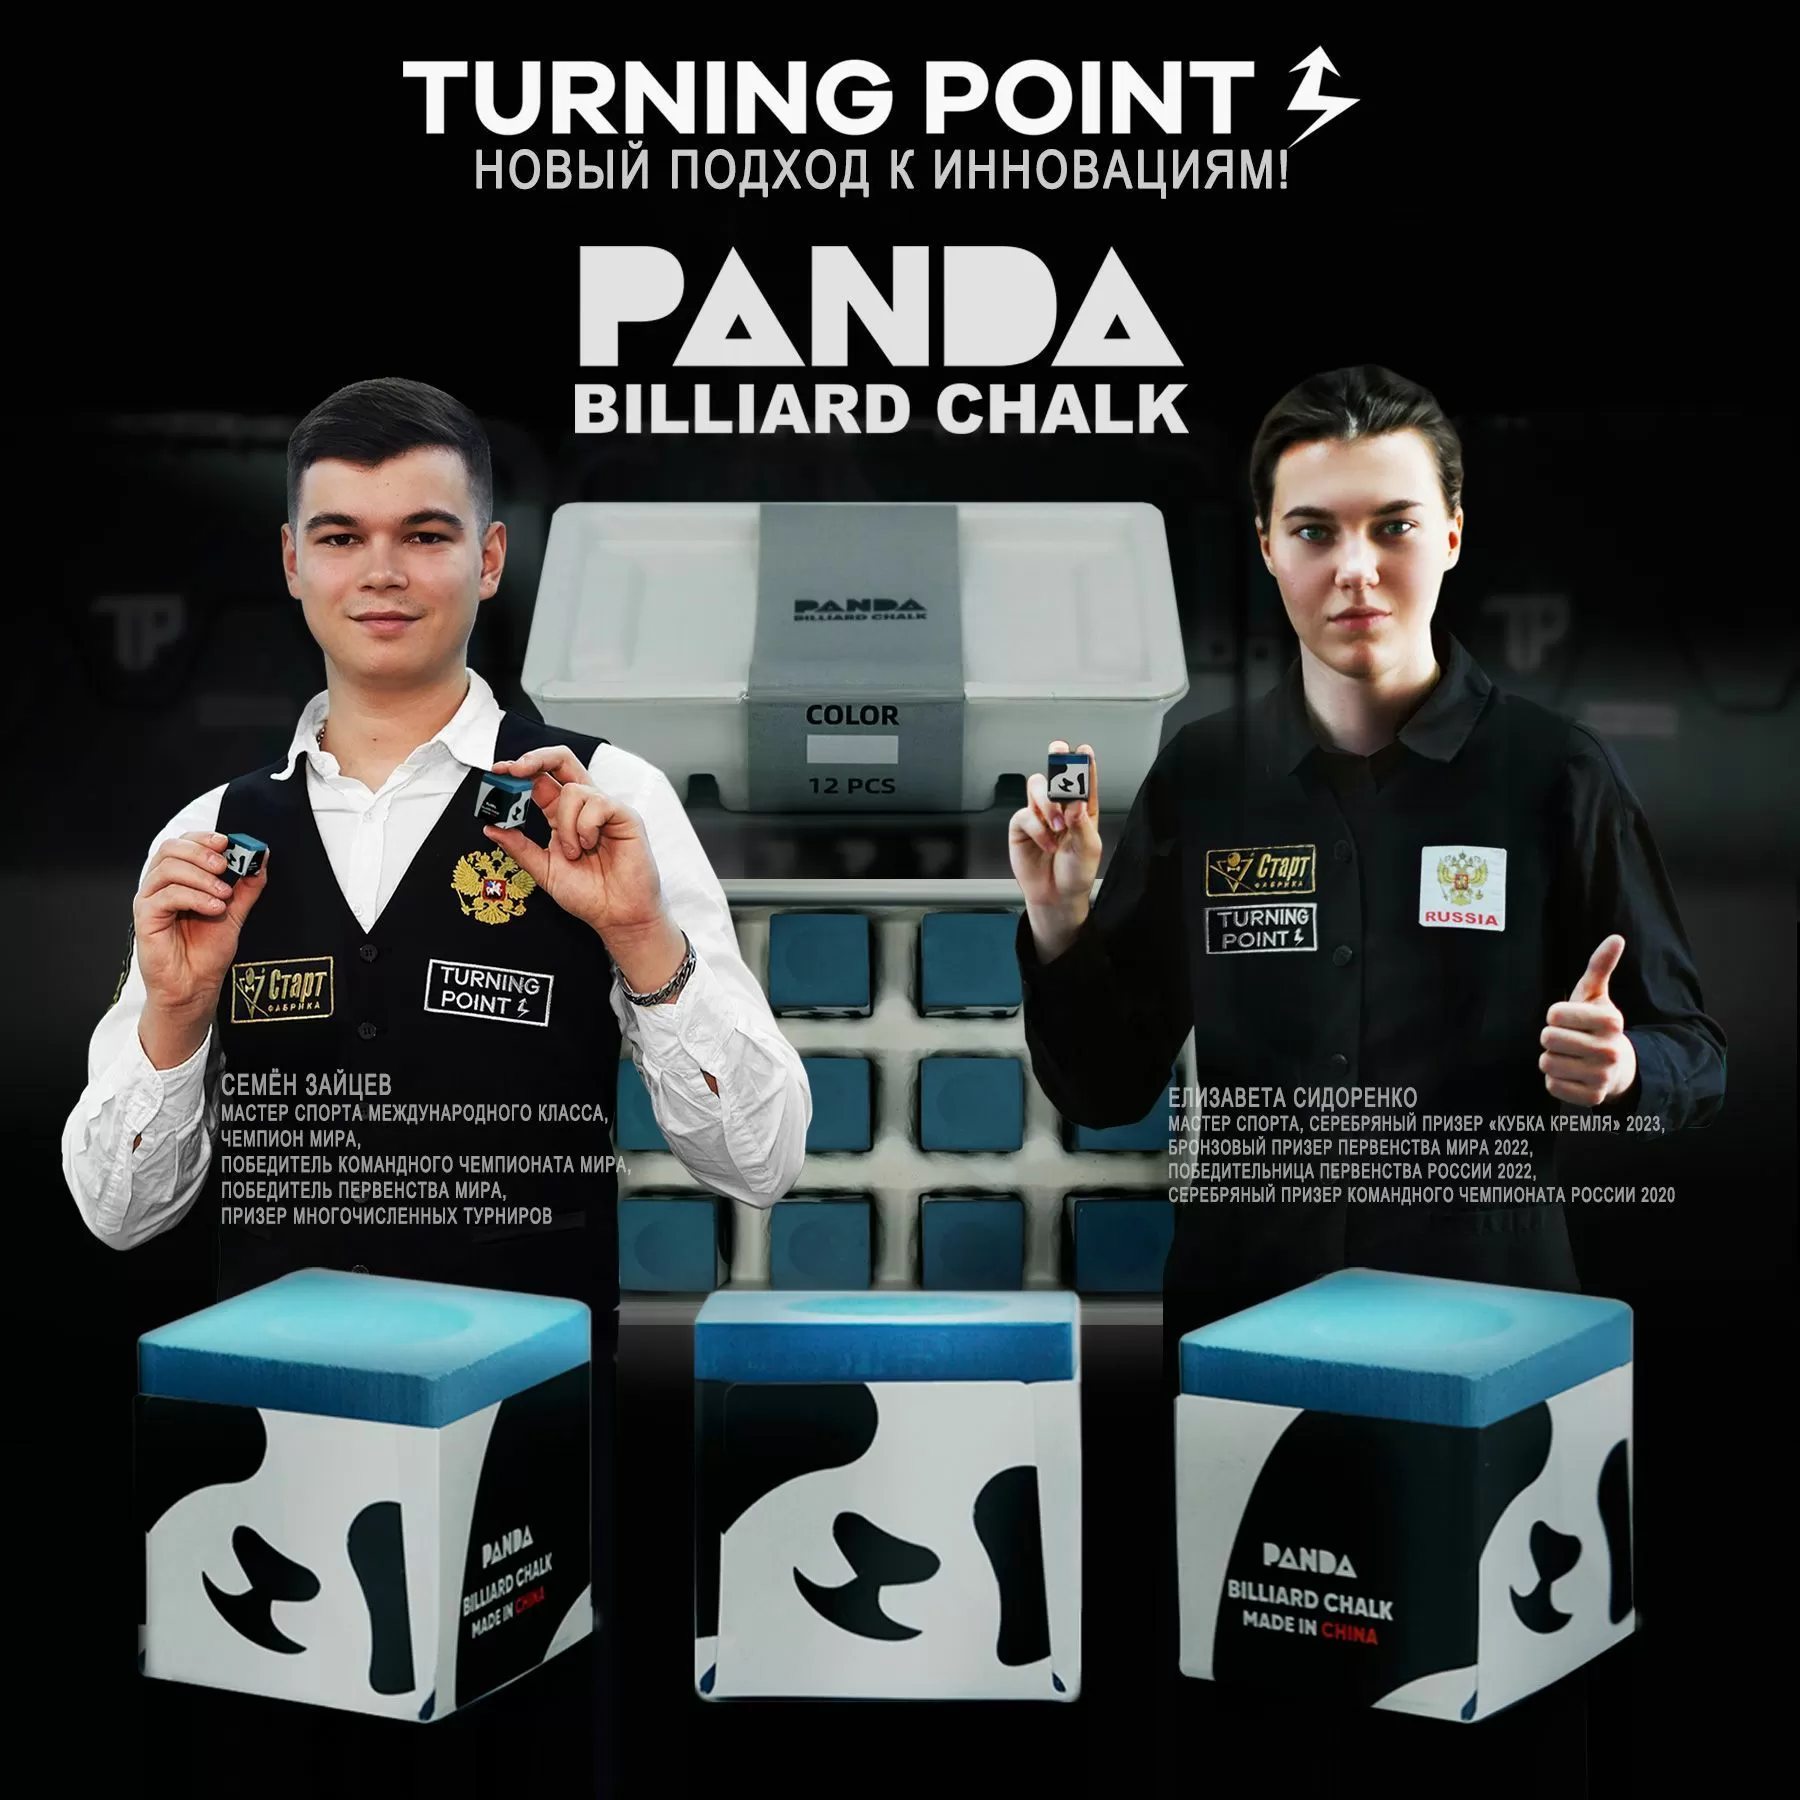 Бильярдный мел PANDA от бренда Turning Point — новинка Фабрики «Старт»!